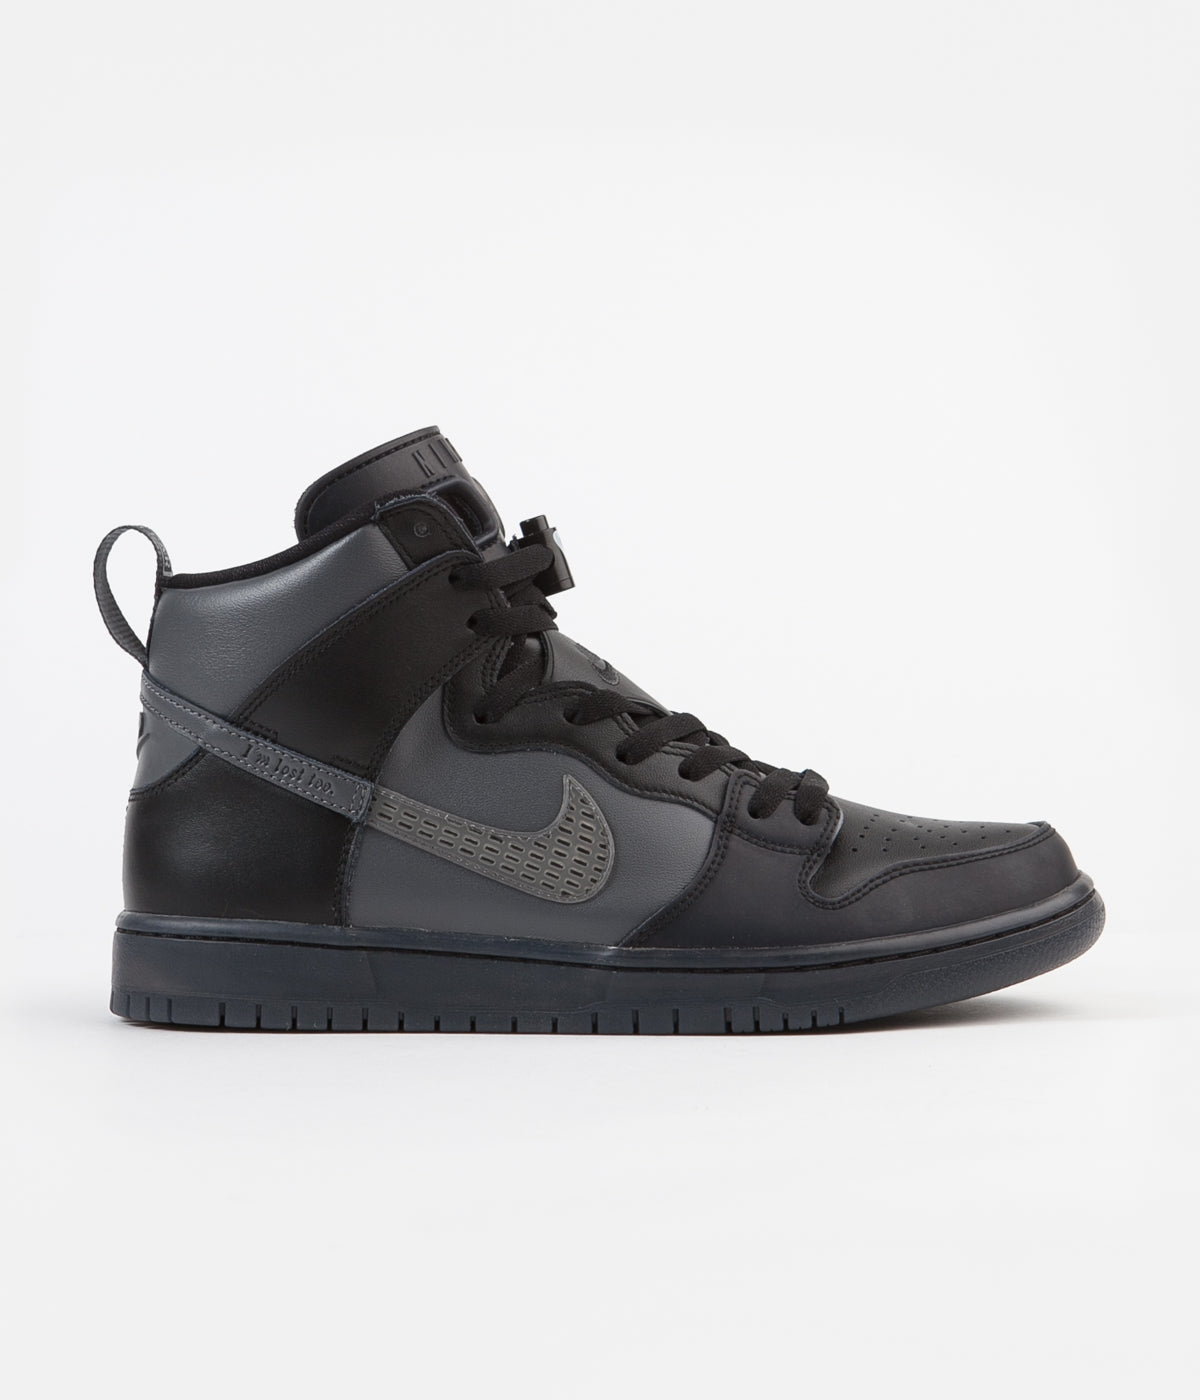 Nike SB FPAR Dunk High Pro Premium Shoes - Black Grey - Black | Releases.Flatspot